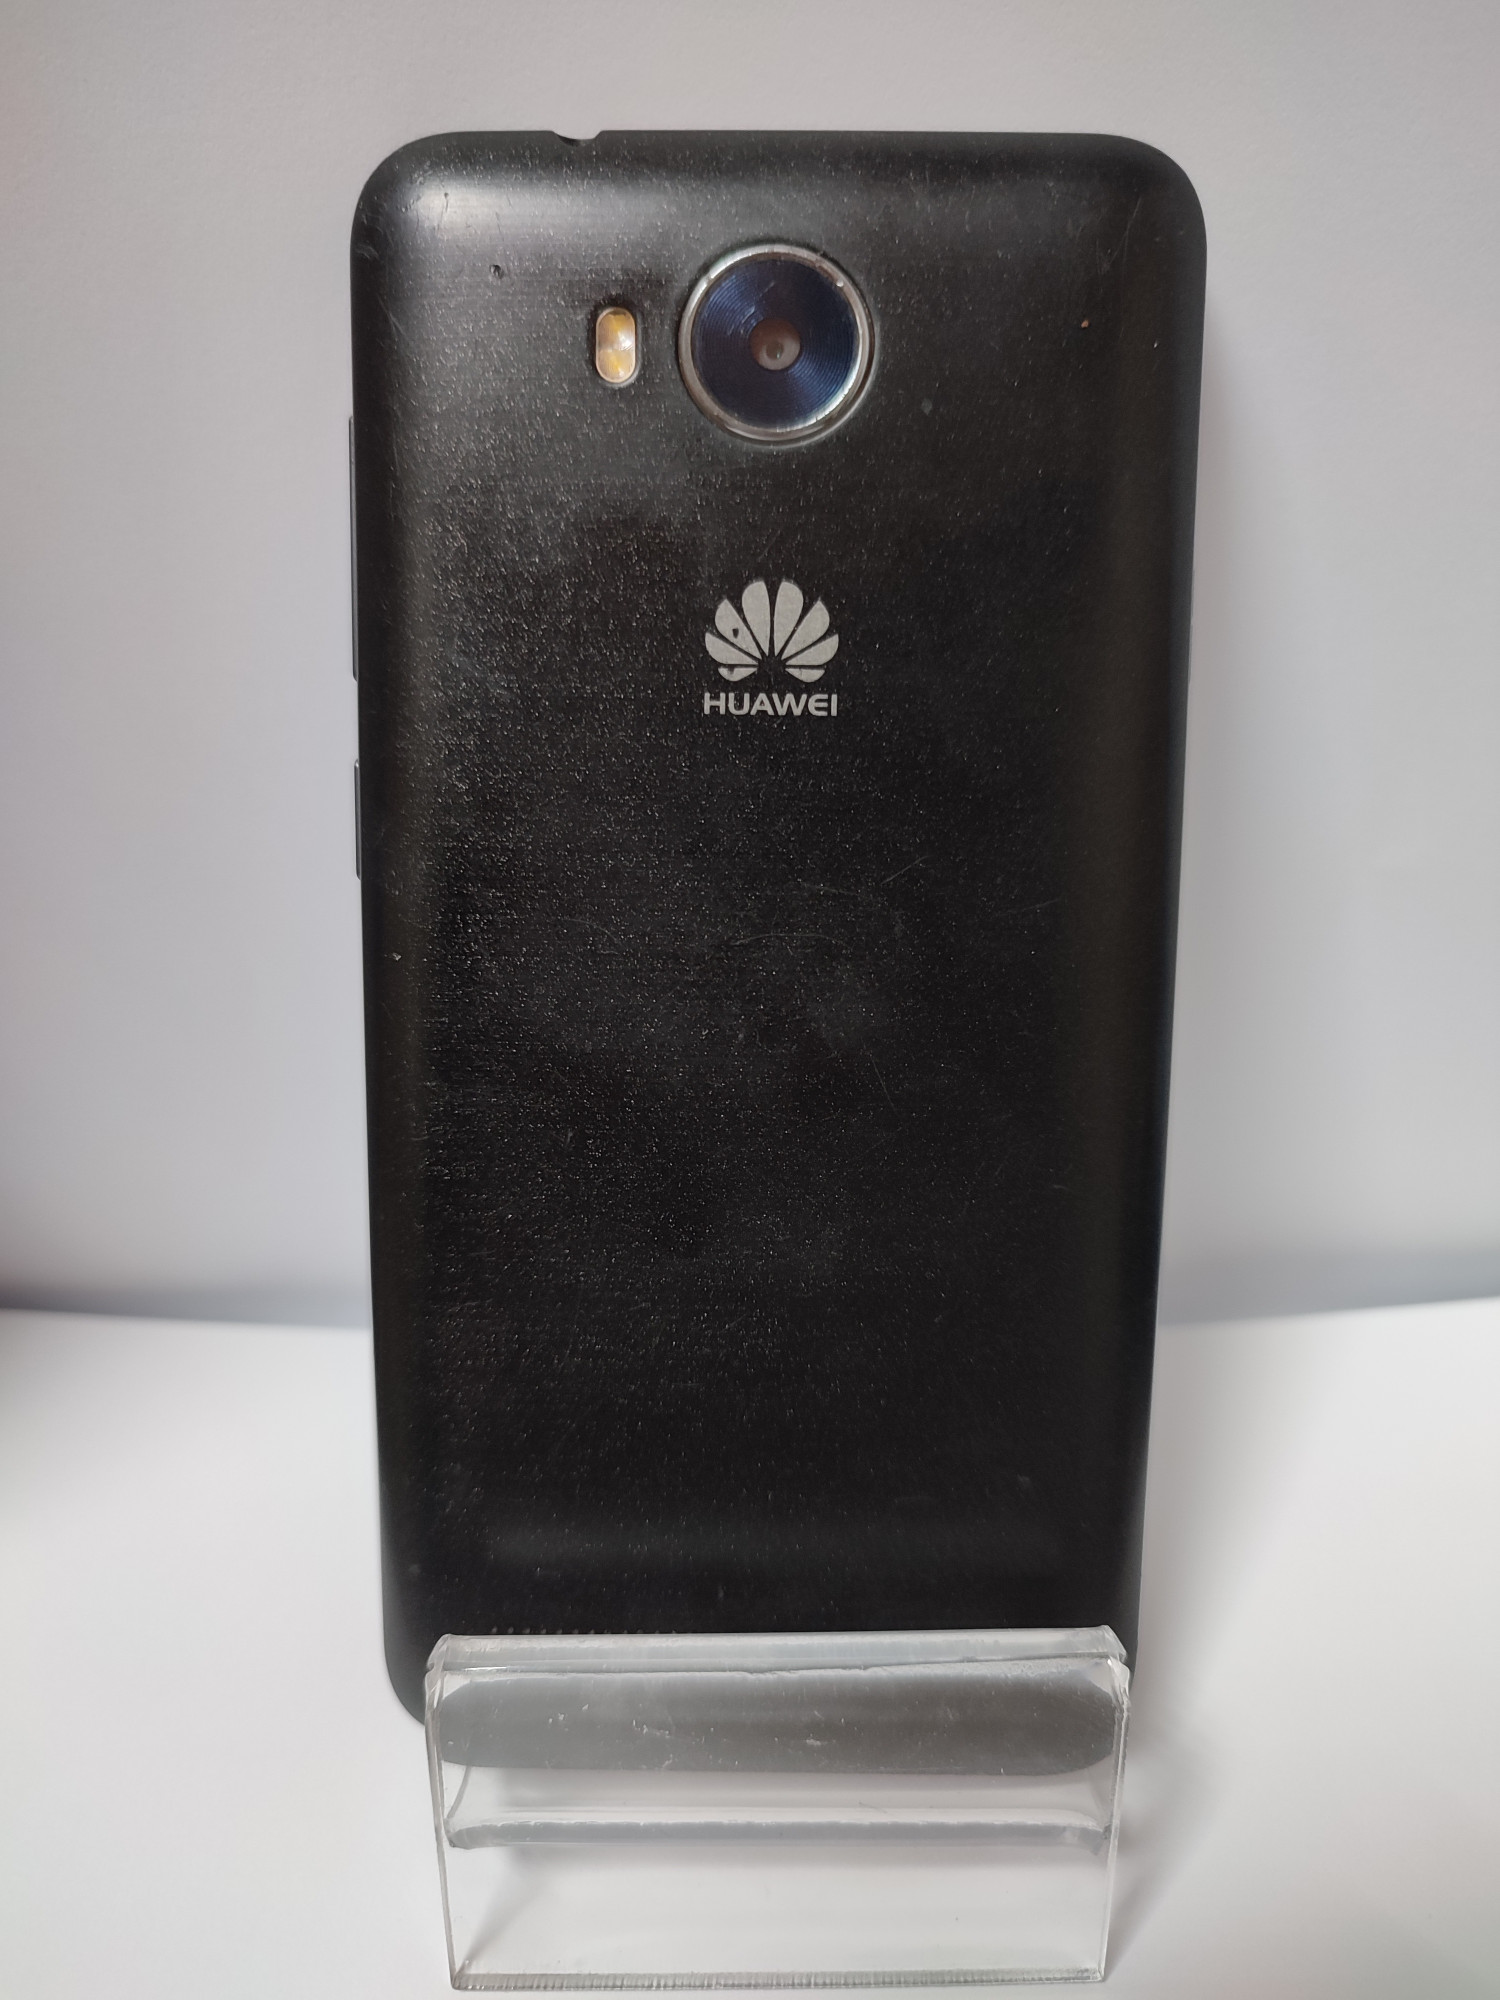 Huawei Y3 II 1/8Gb (LUA-U22) 1